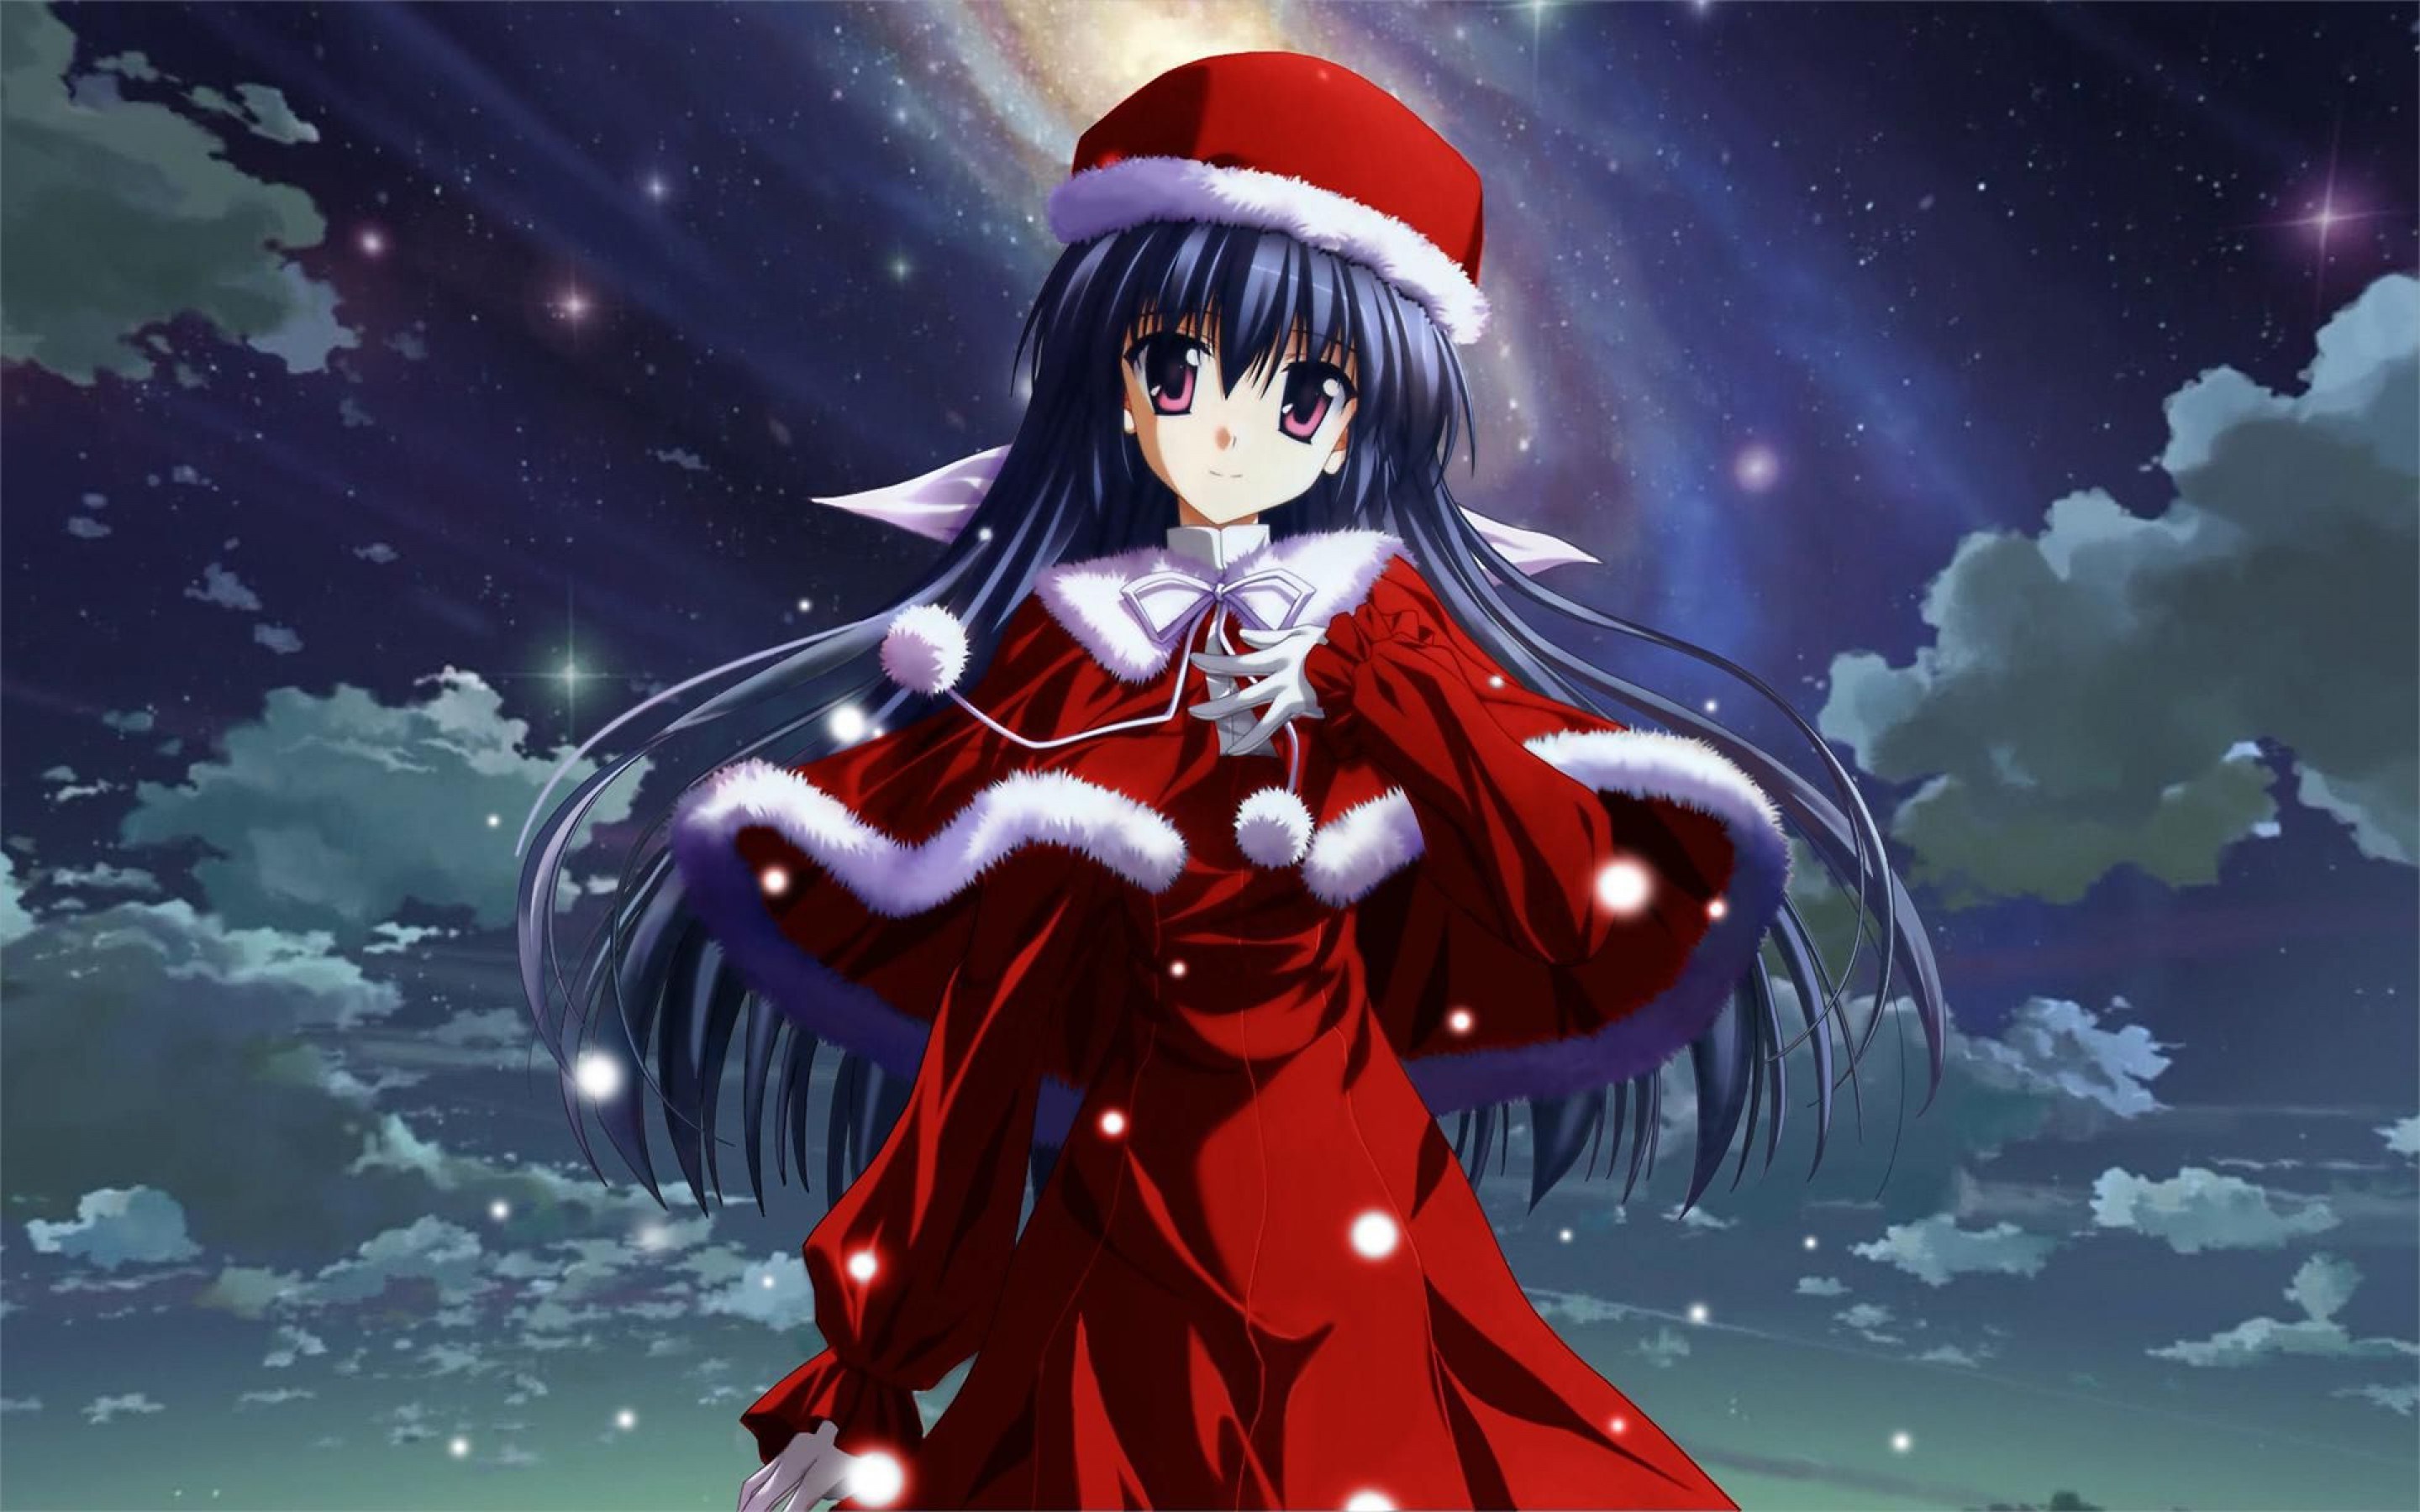 Merry Christmas Cute Anime Images Red Cute Anime Girl Anime